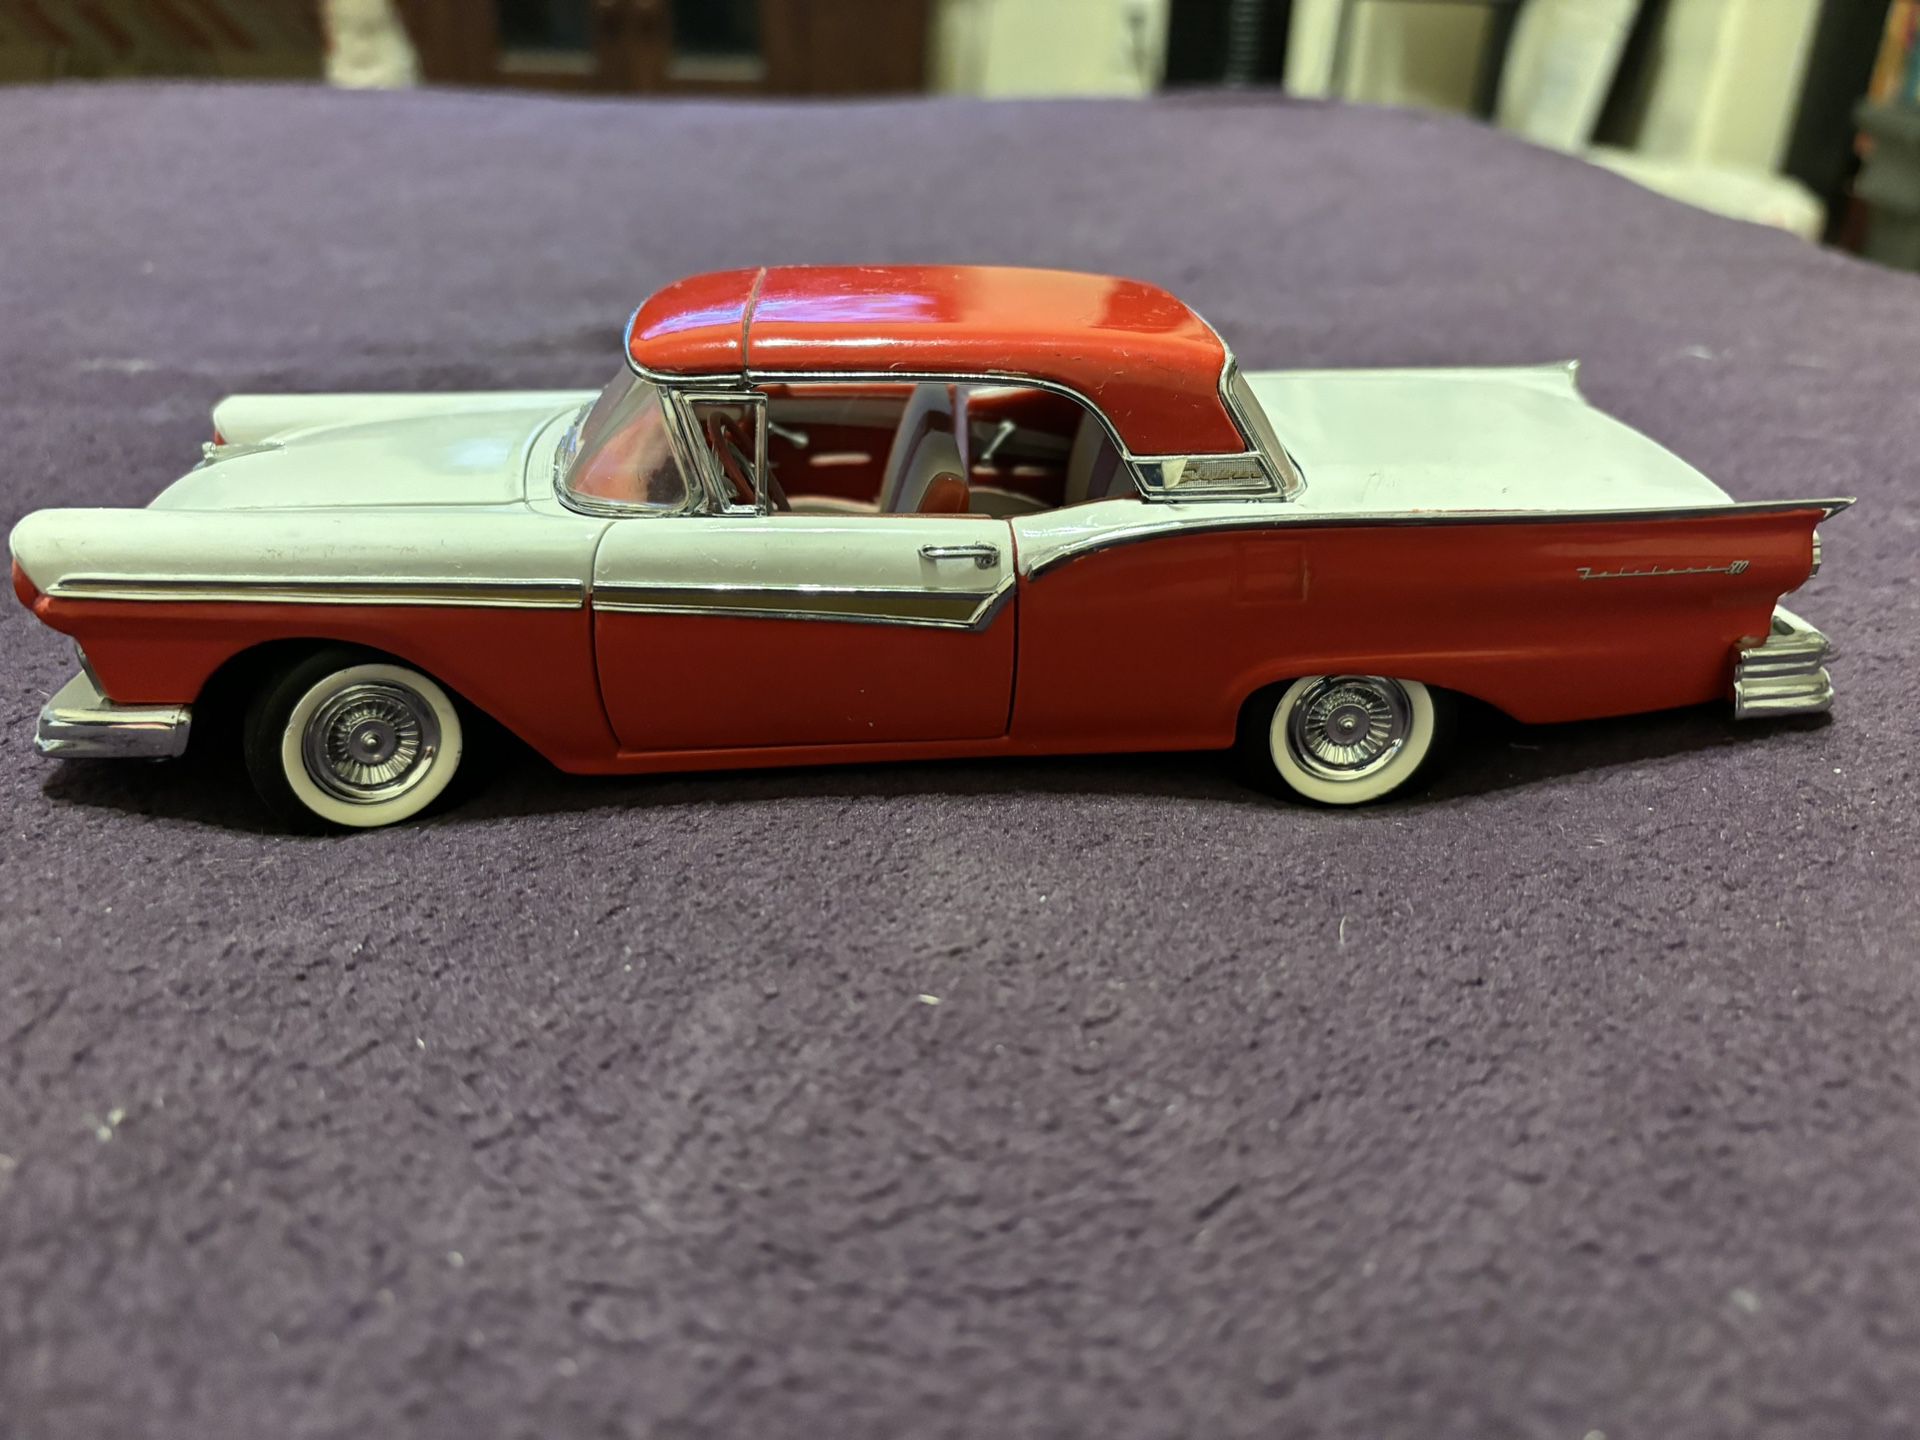 Franklin Mint Die Cast Car 1957